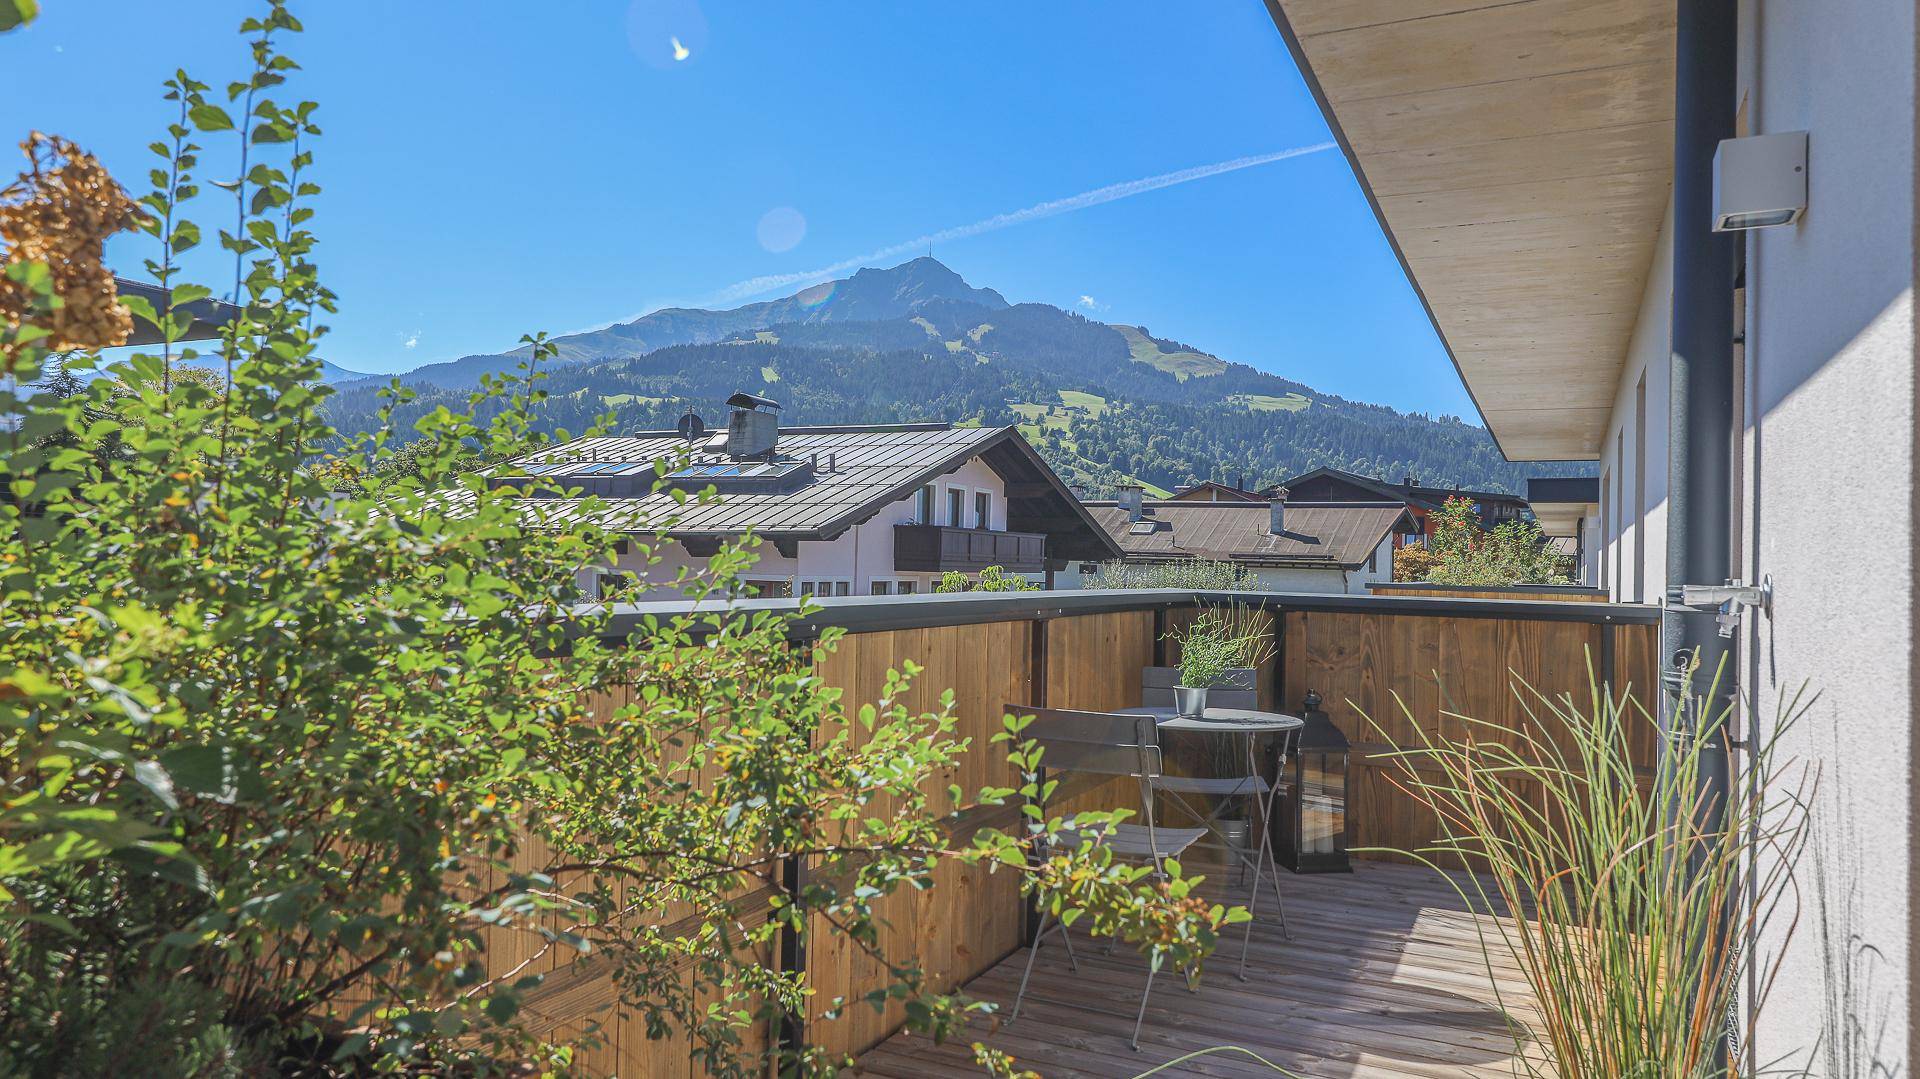 Exklusives Penthouse in zentraler Toplage in St. Johann in Tirol kaufen.